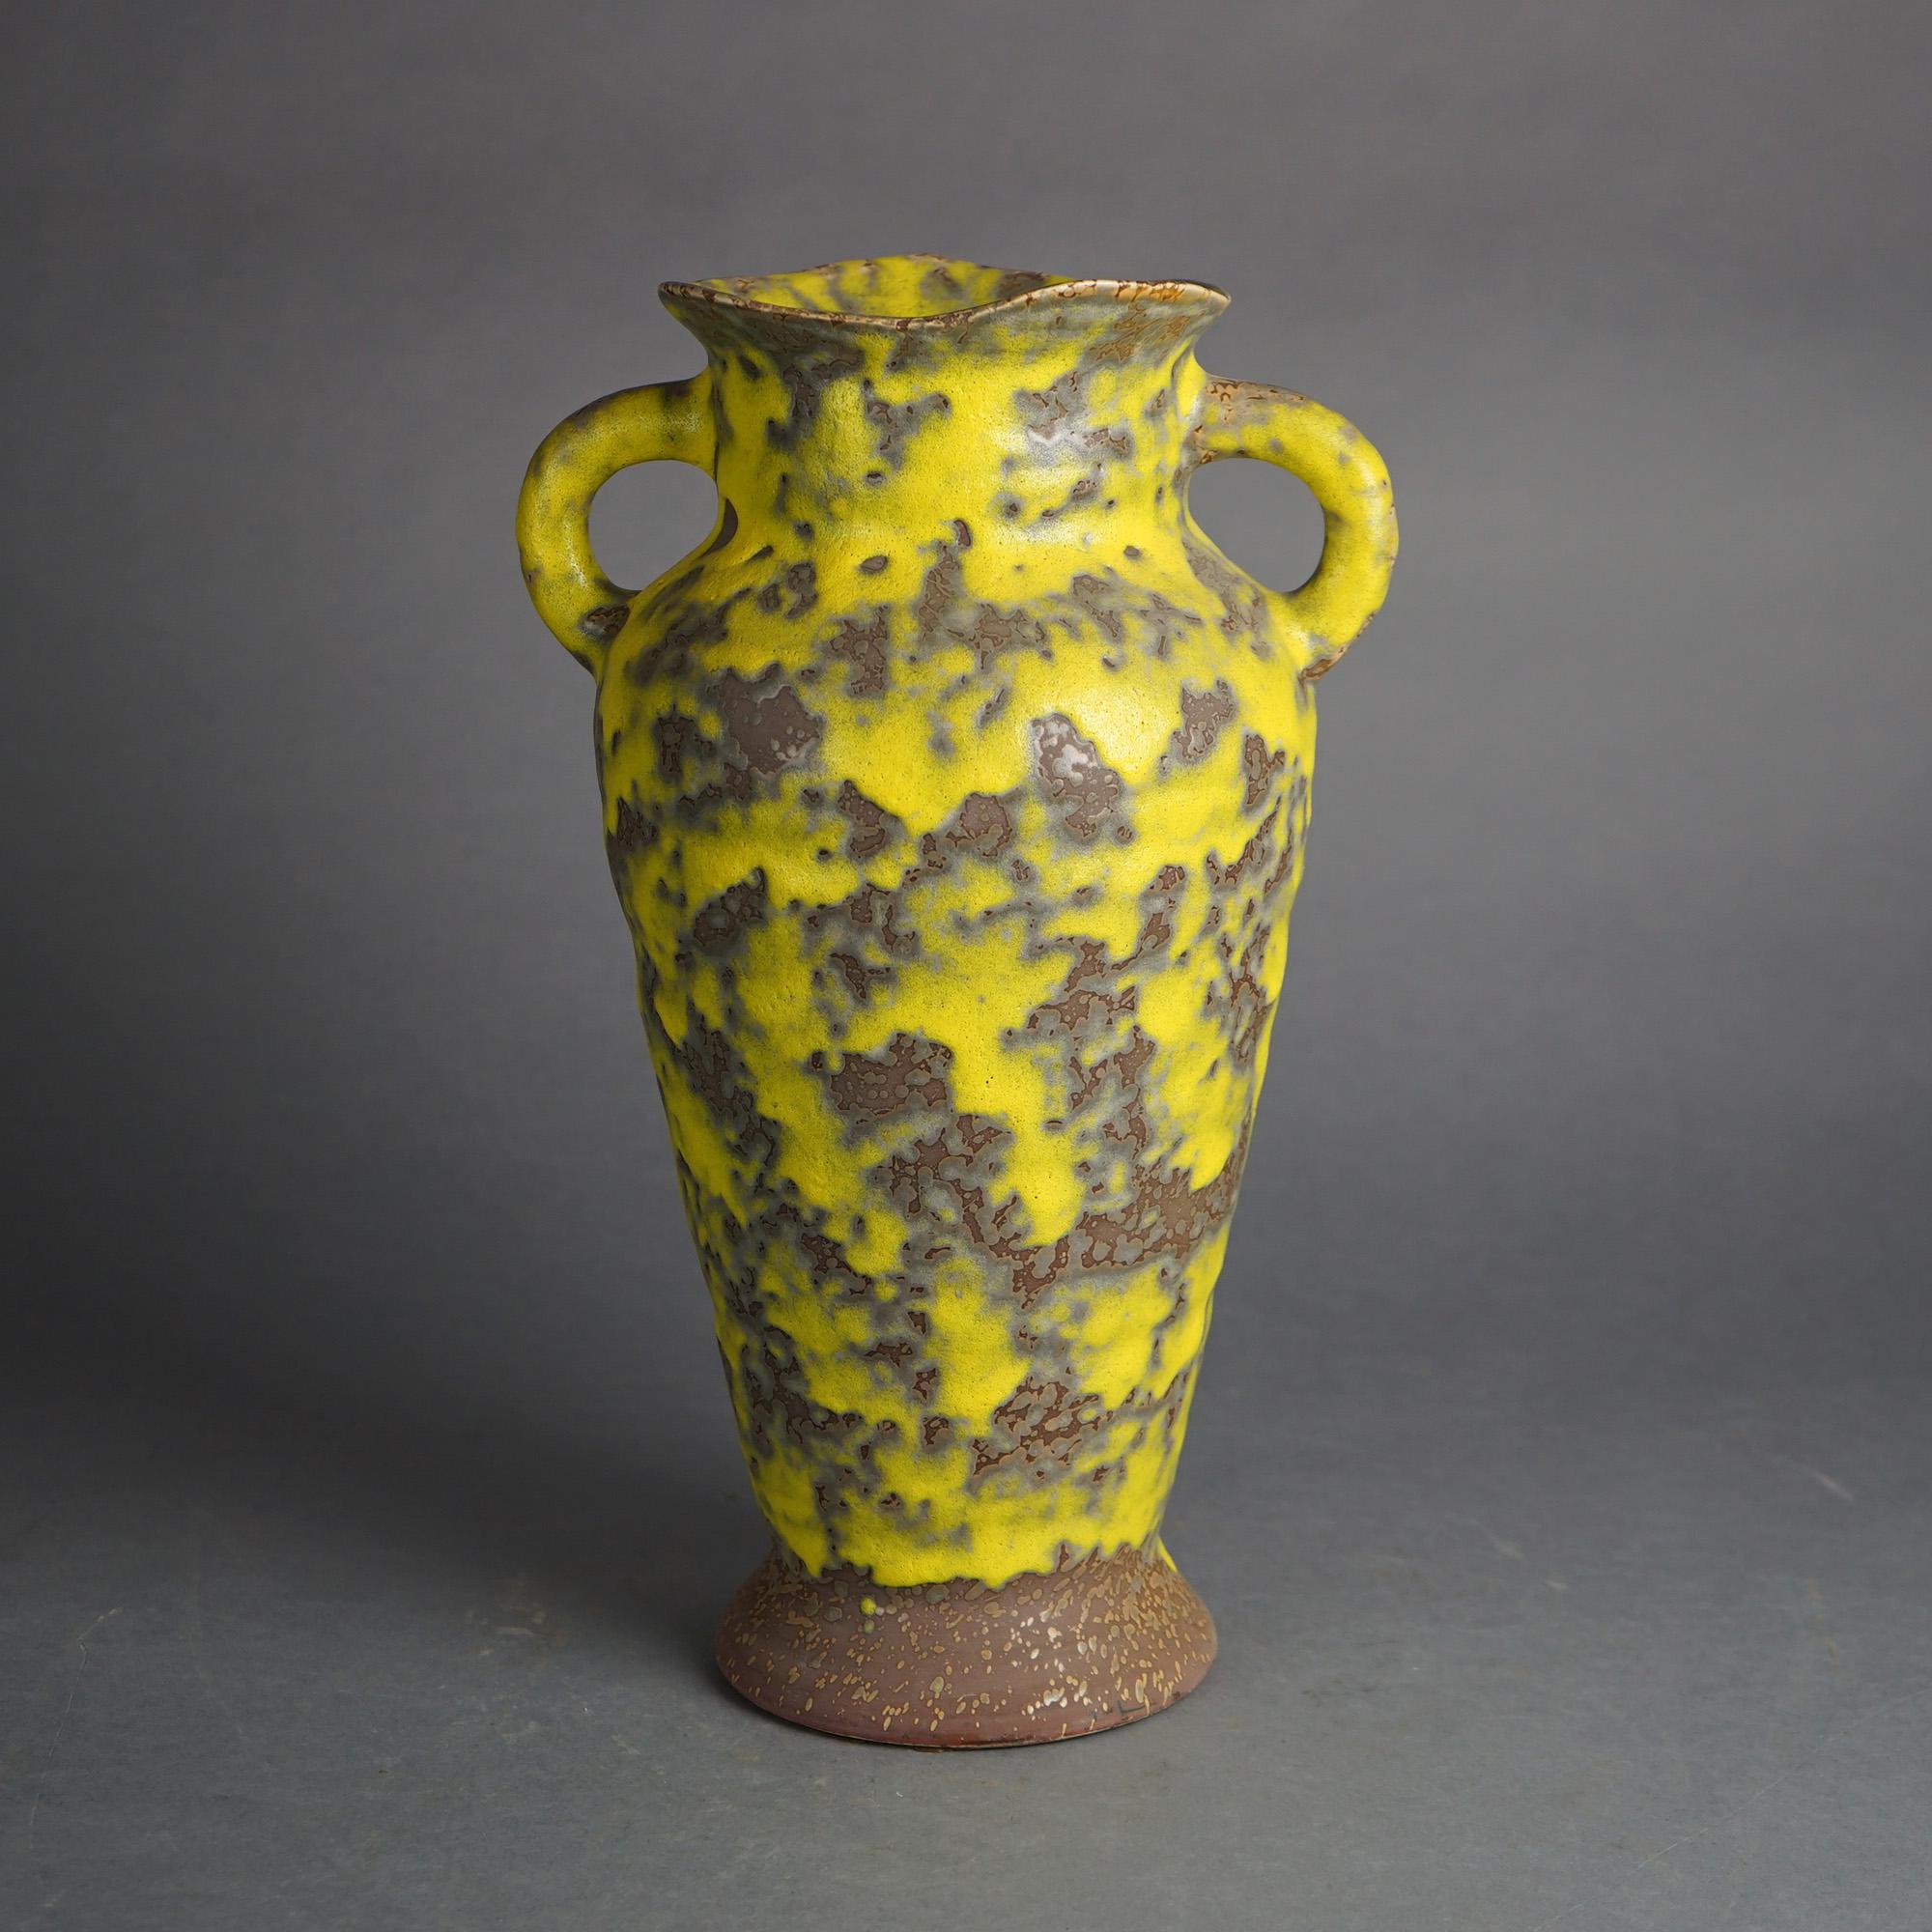 Mid Century Modern Haeger Lemon Peel Art Pottery Double Handled Vase with Ruffled Rim, 20thC

Measures -  15.75